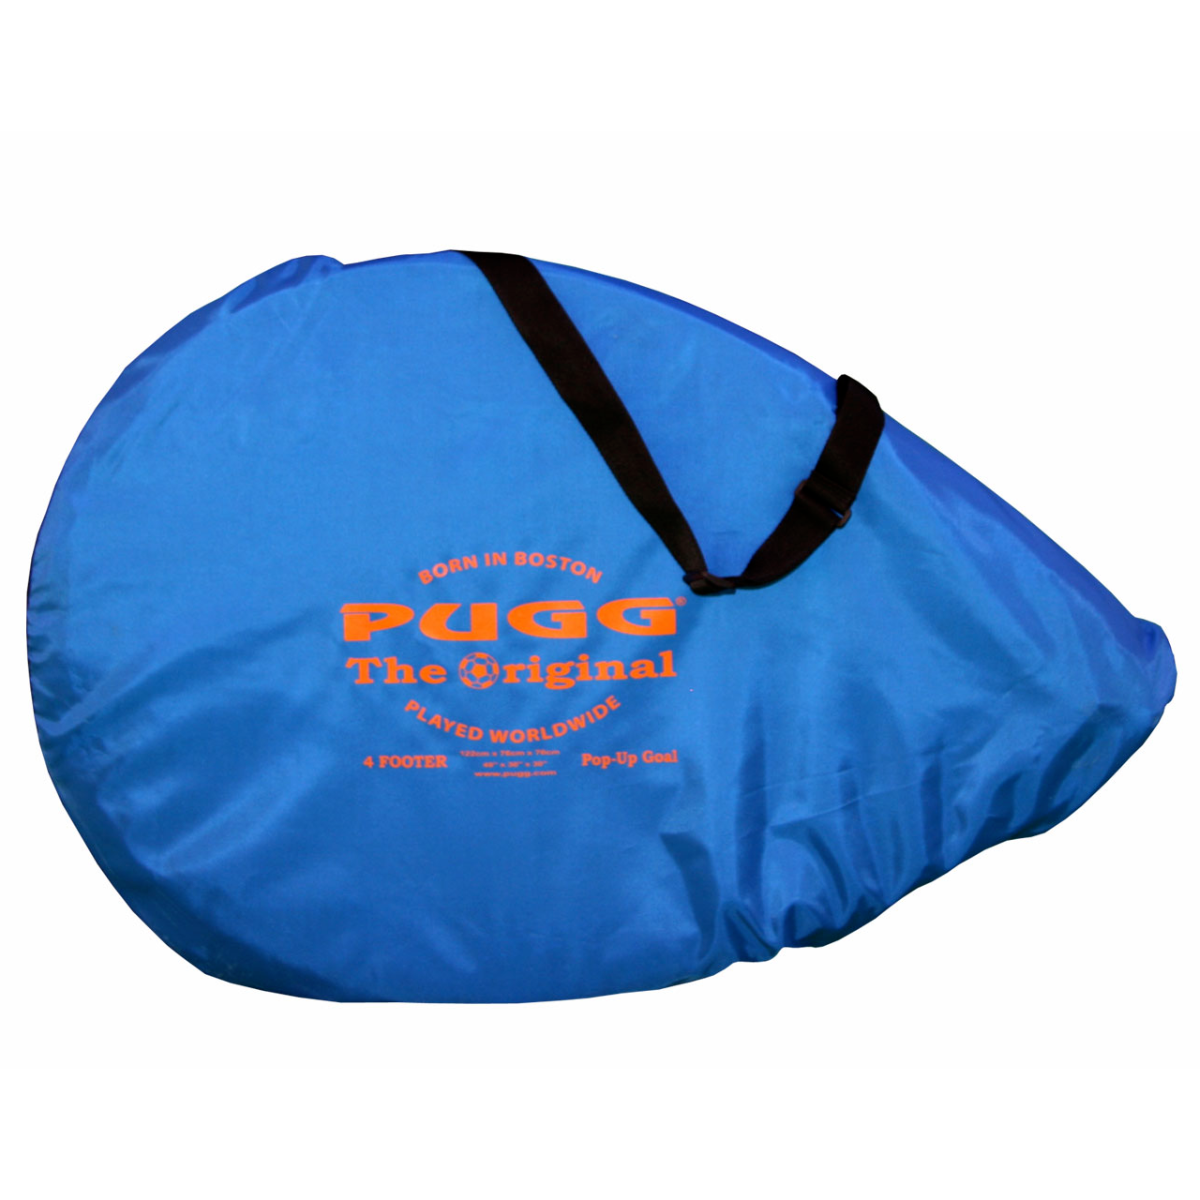 PUGG 4 Footer Carrying Bag - Blue (Main)